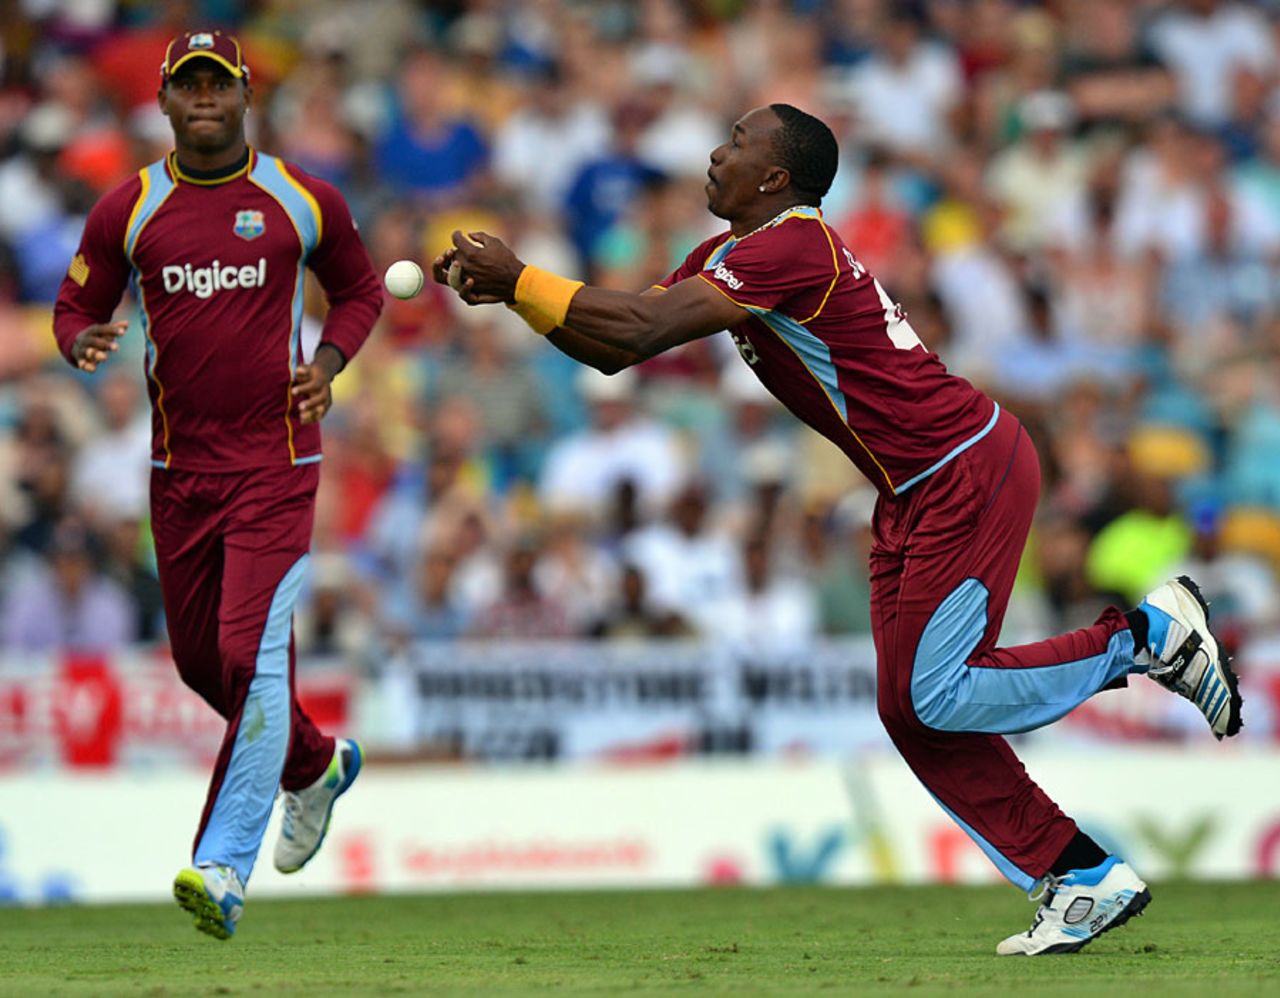 Dwayne Bravo gave Jos Buttler a life, West Indies v England, 2nd T20, Barbados, March 11, 2014